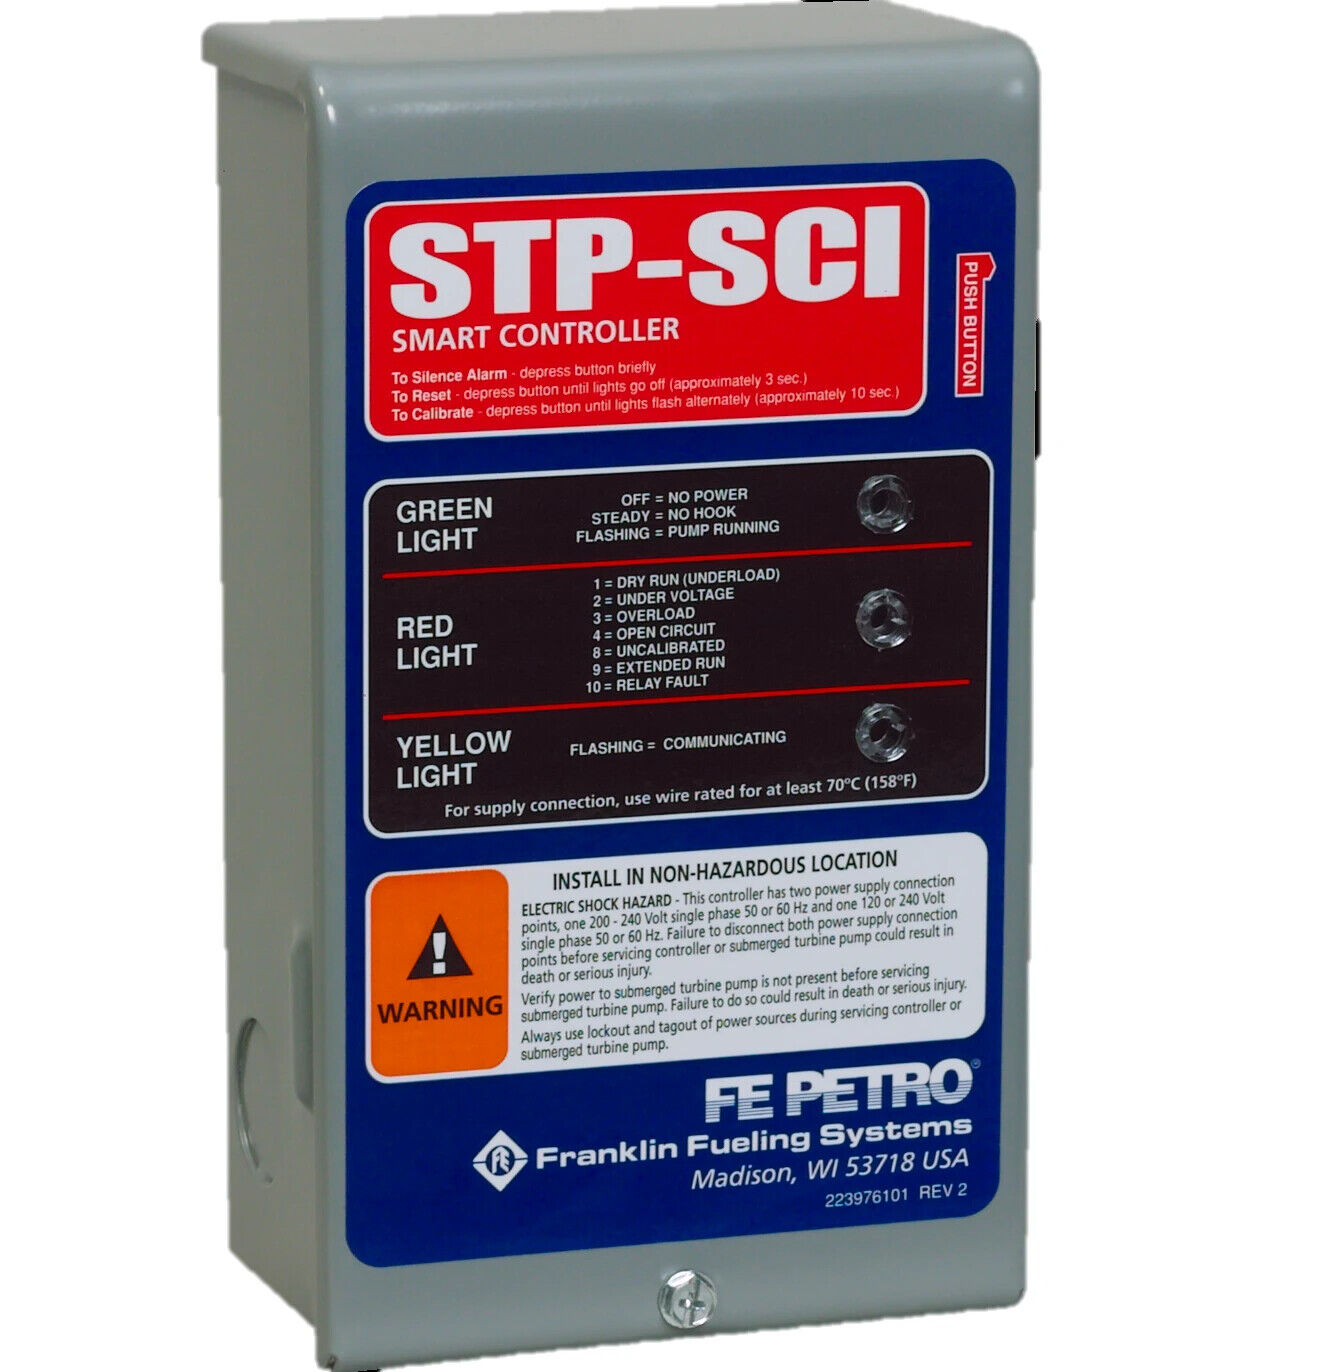 FE Petro Smart Controller STP-SCI 2.5 HP 240V 1 Phase Model 5800100215